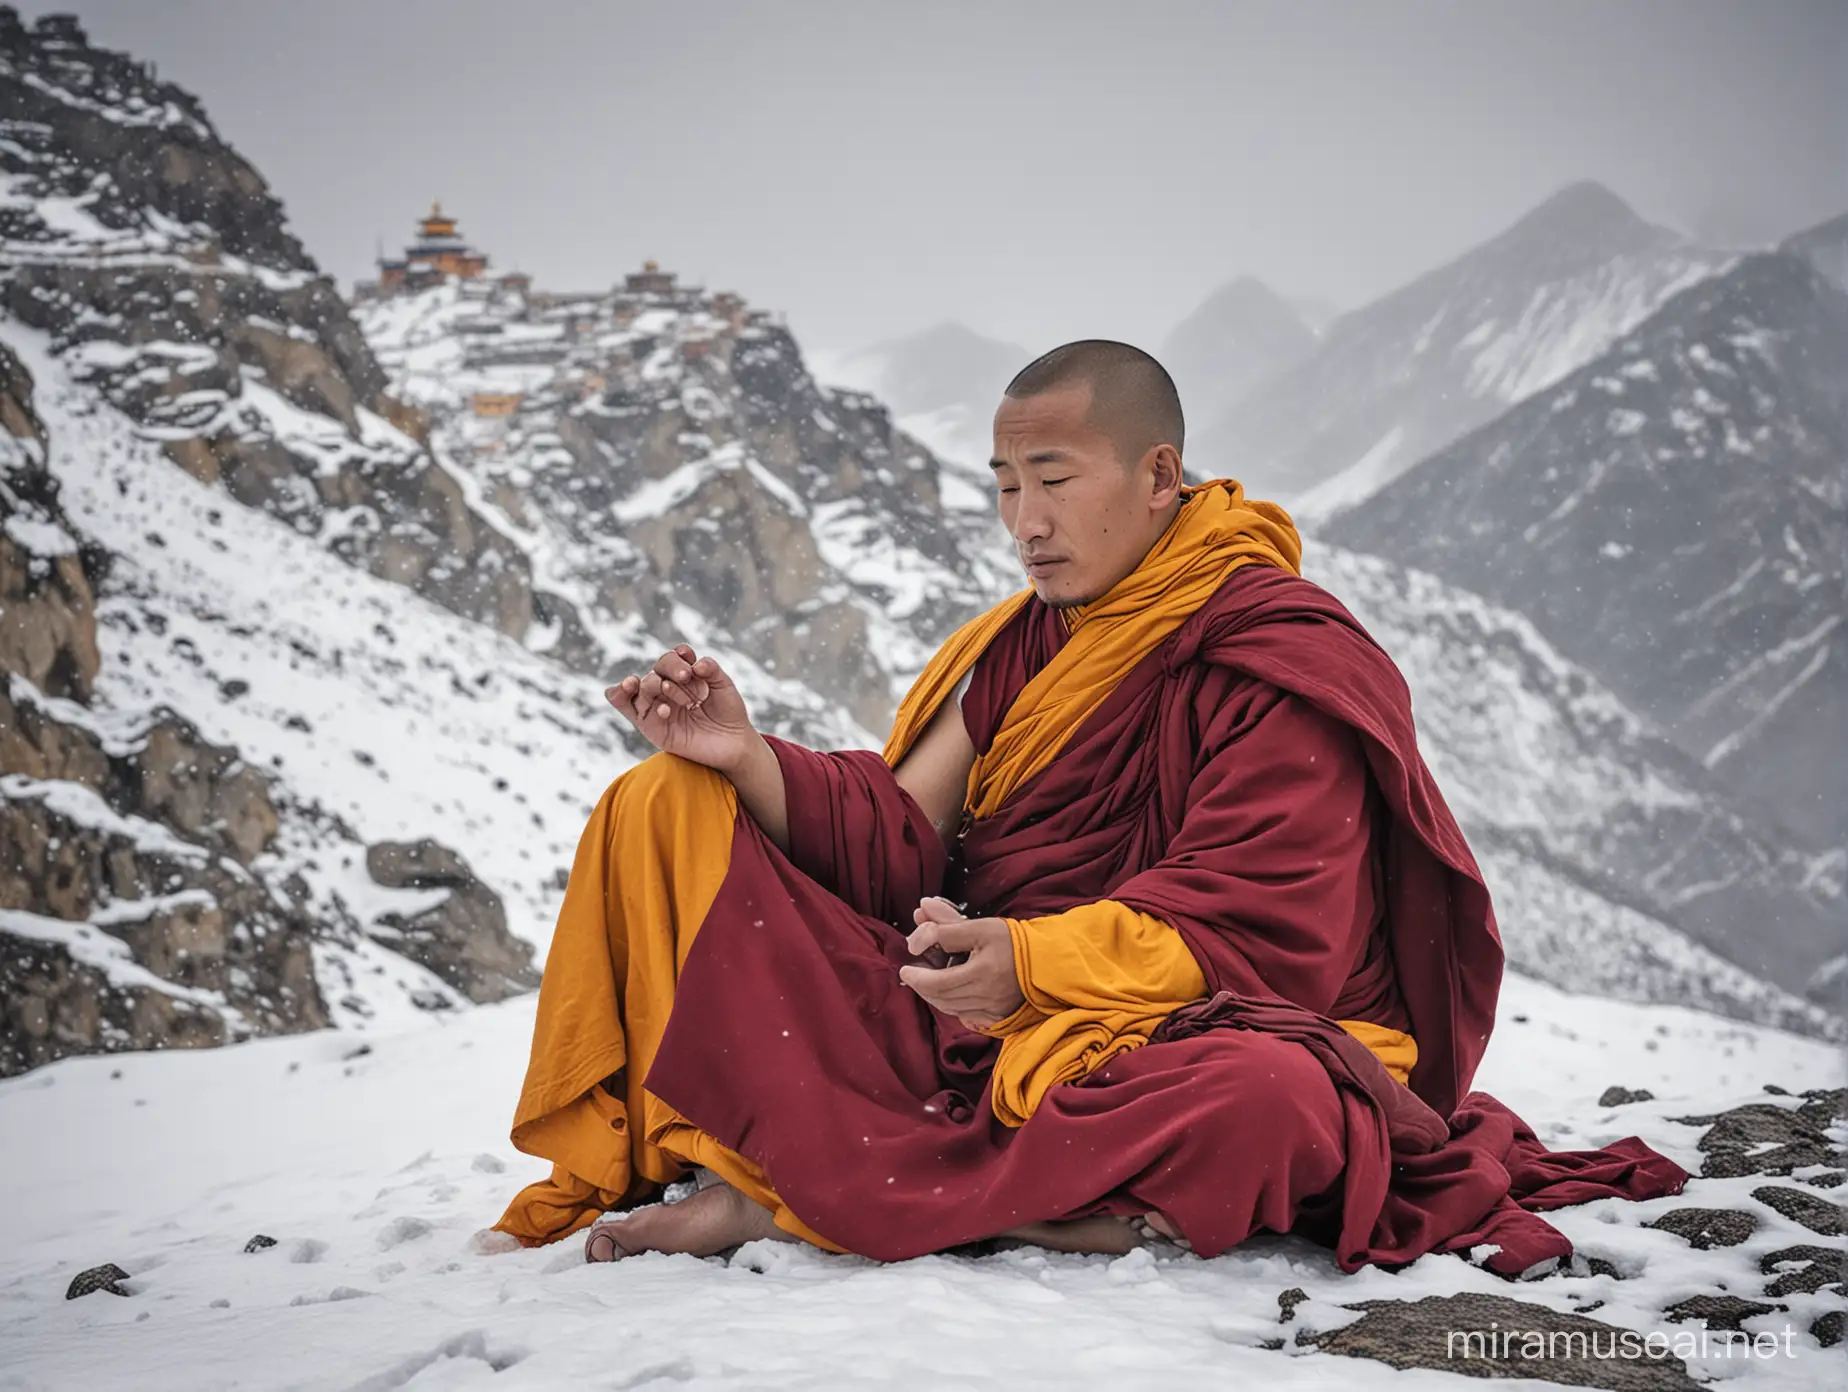 Tibetan Monk Meditating on SnowCapped Mountain Summit